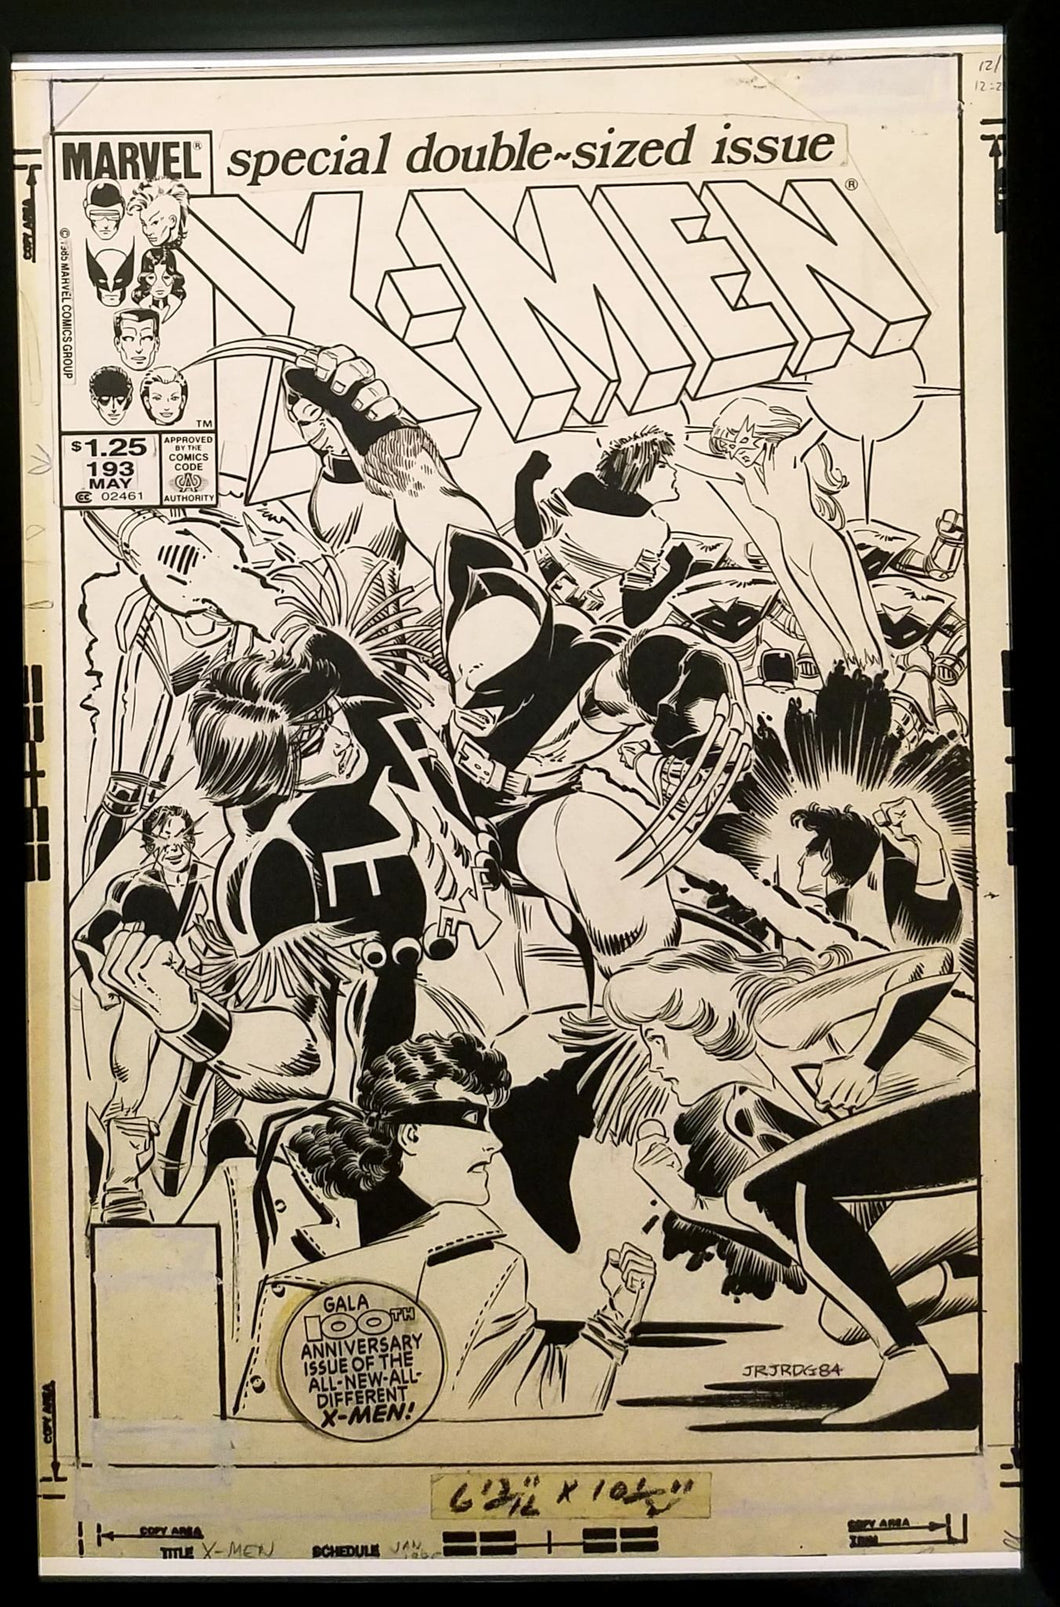 Uncanny X-Men #193 John Romita Jr. 11x17 FRAMED Original Art Poster Marvel Comics